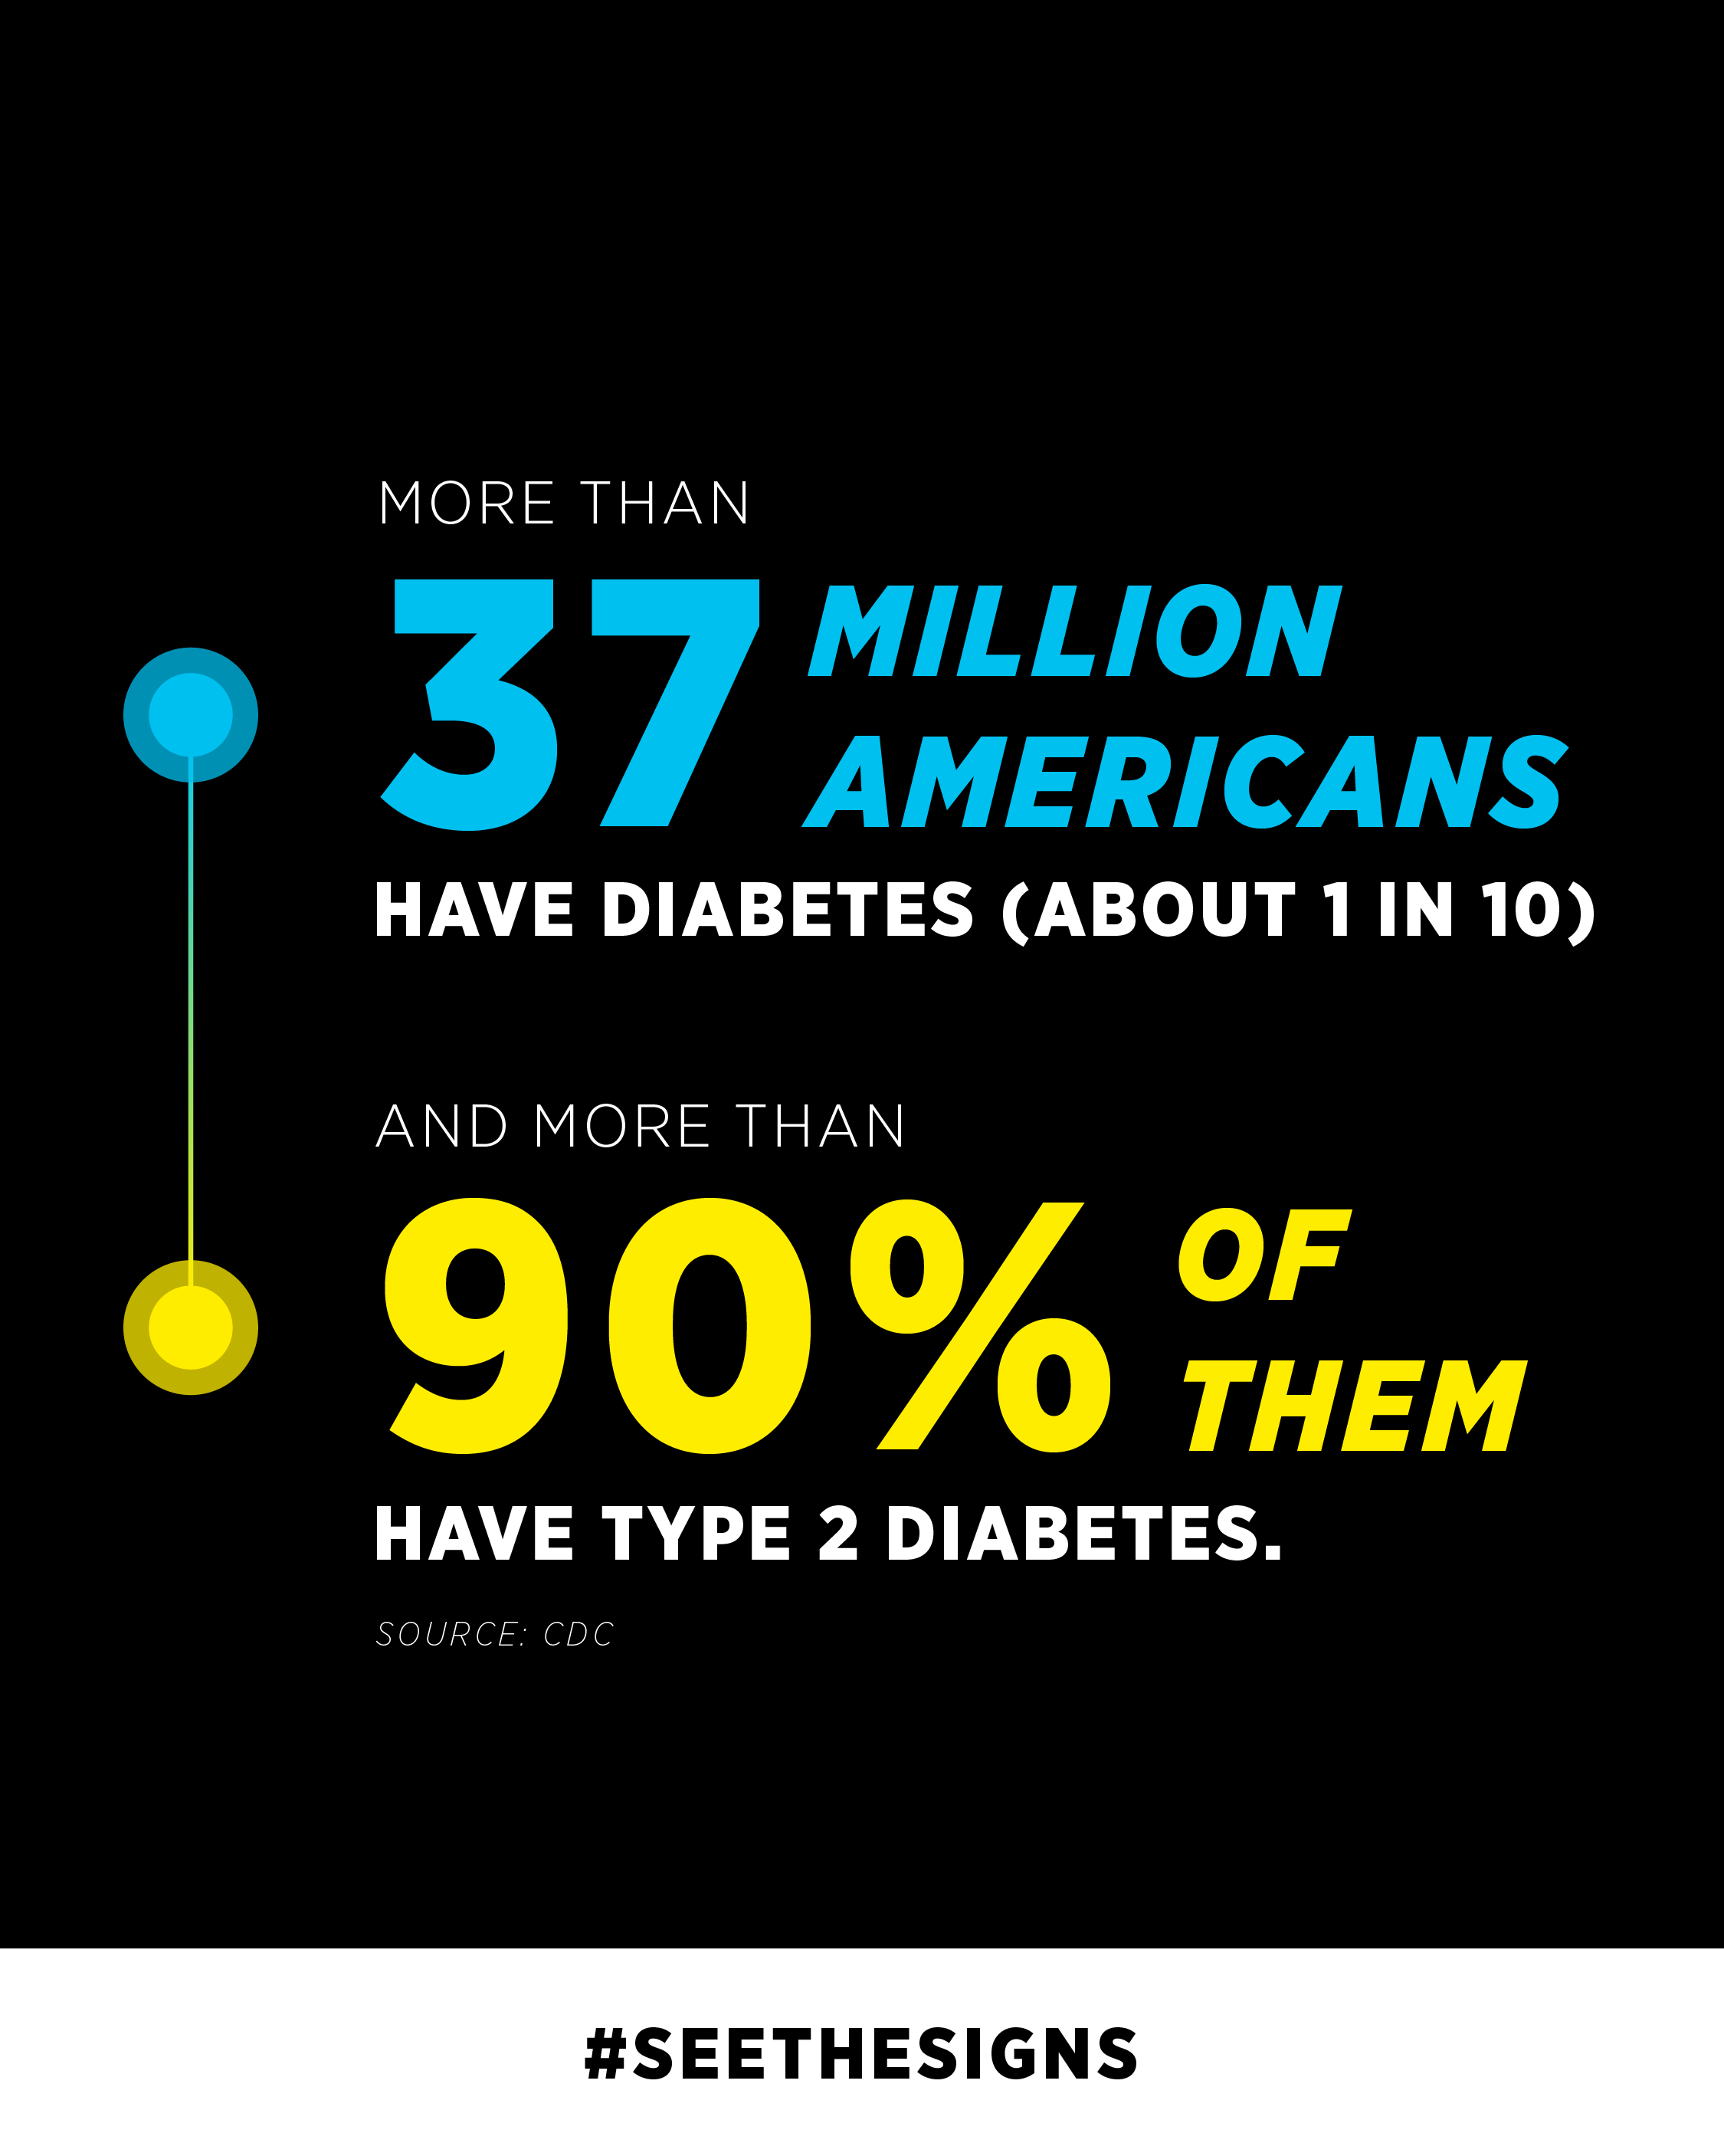 More than 37 million Americans have diabetes